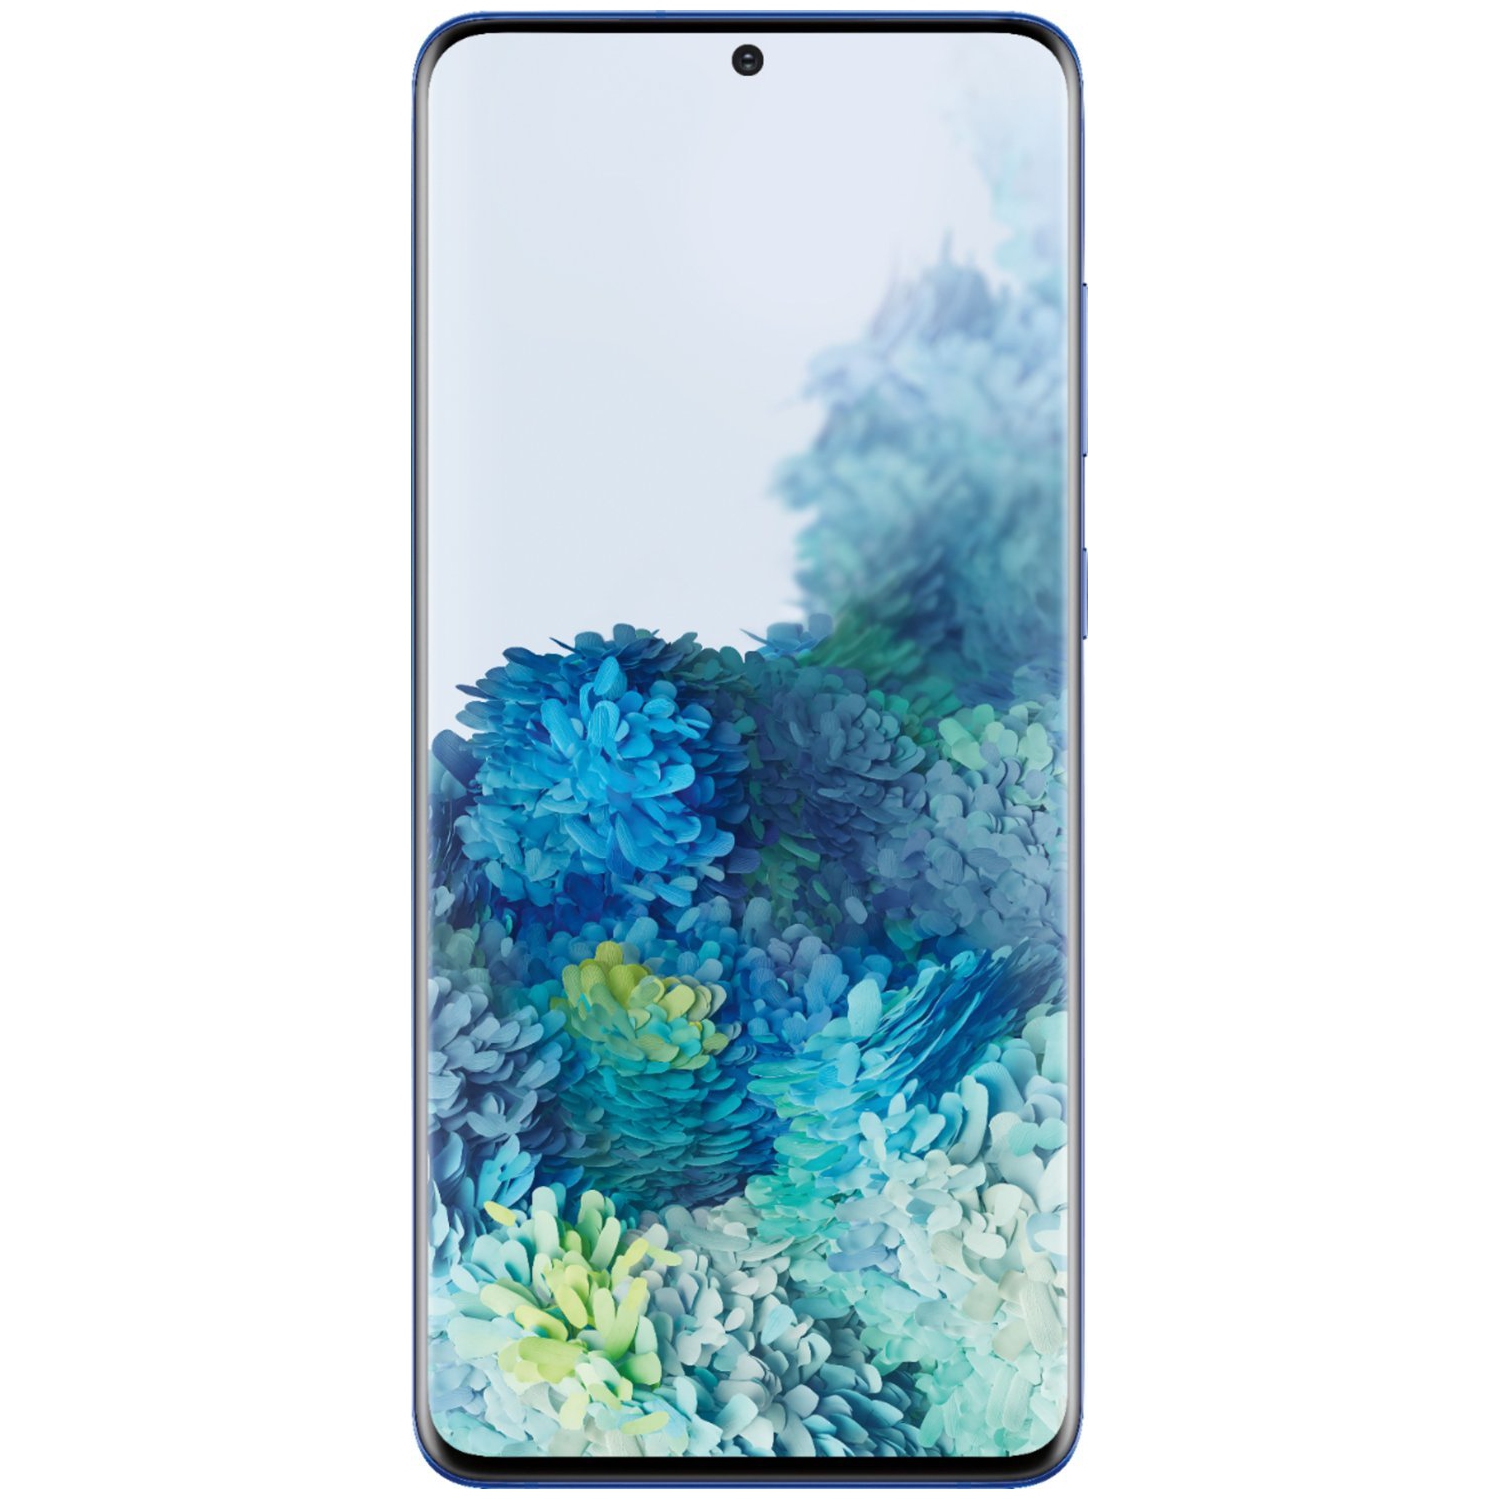 Refurbished (Excellent) - Samsung Galaxy S20+ (Plus) 5G 128GB Smartphone - Cloud Blue - Unlocked - Certified Refurbished